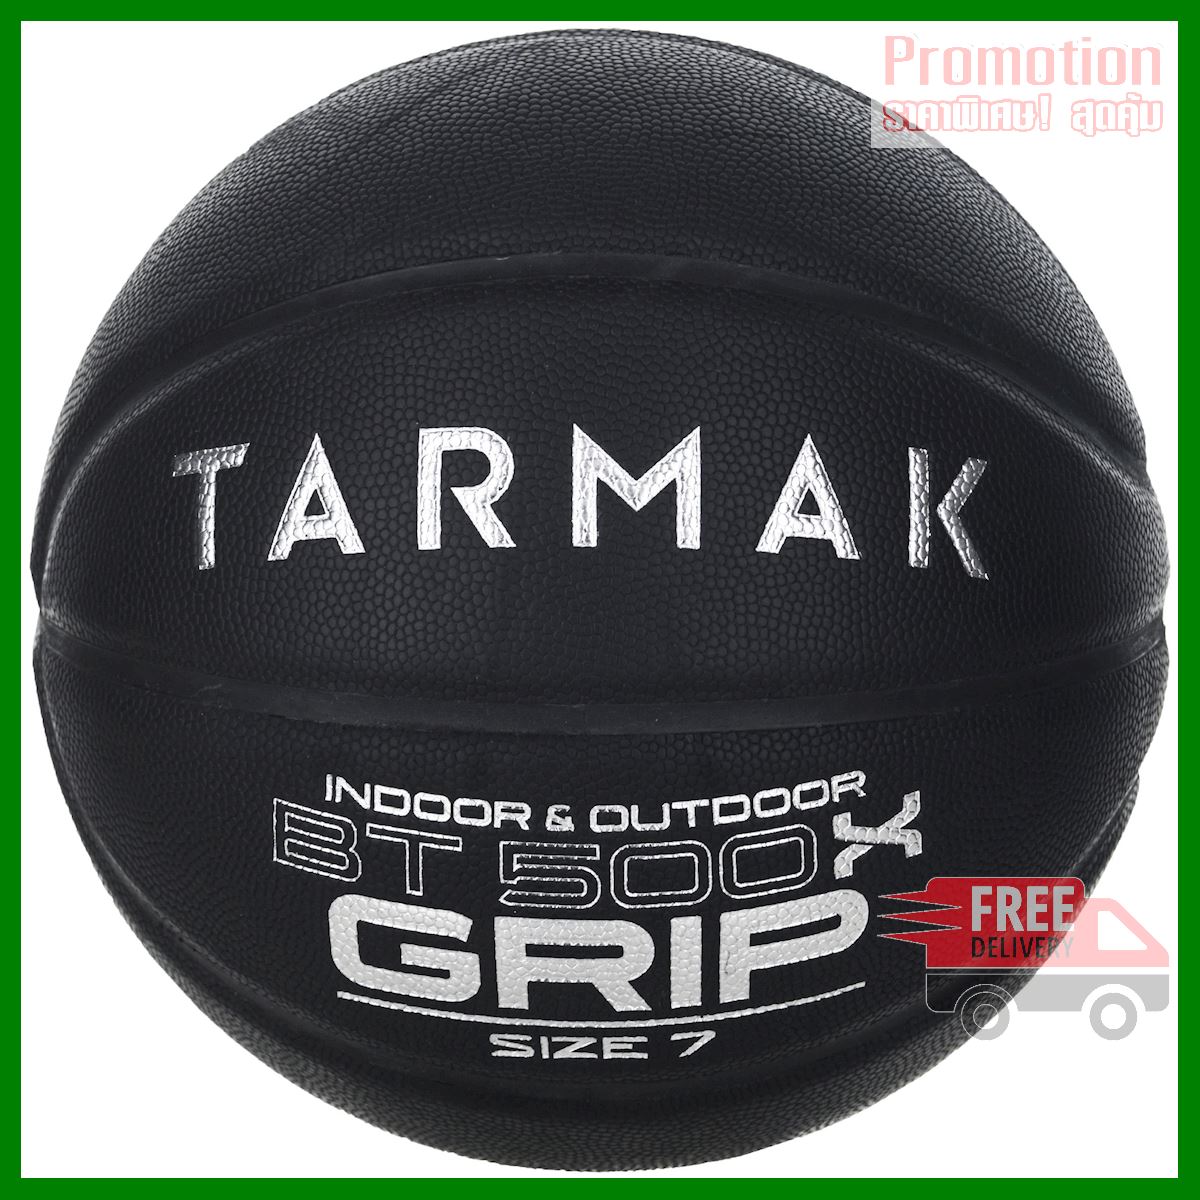 BT500 Grip Adult Size 7 Basketball - Black Great ball feel